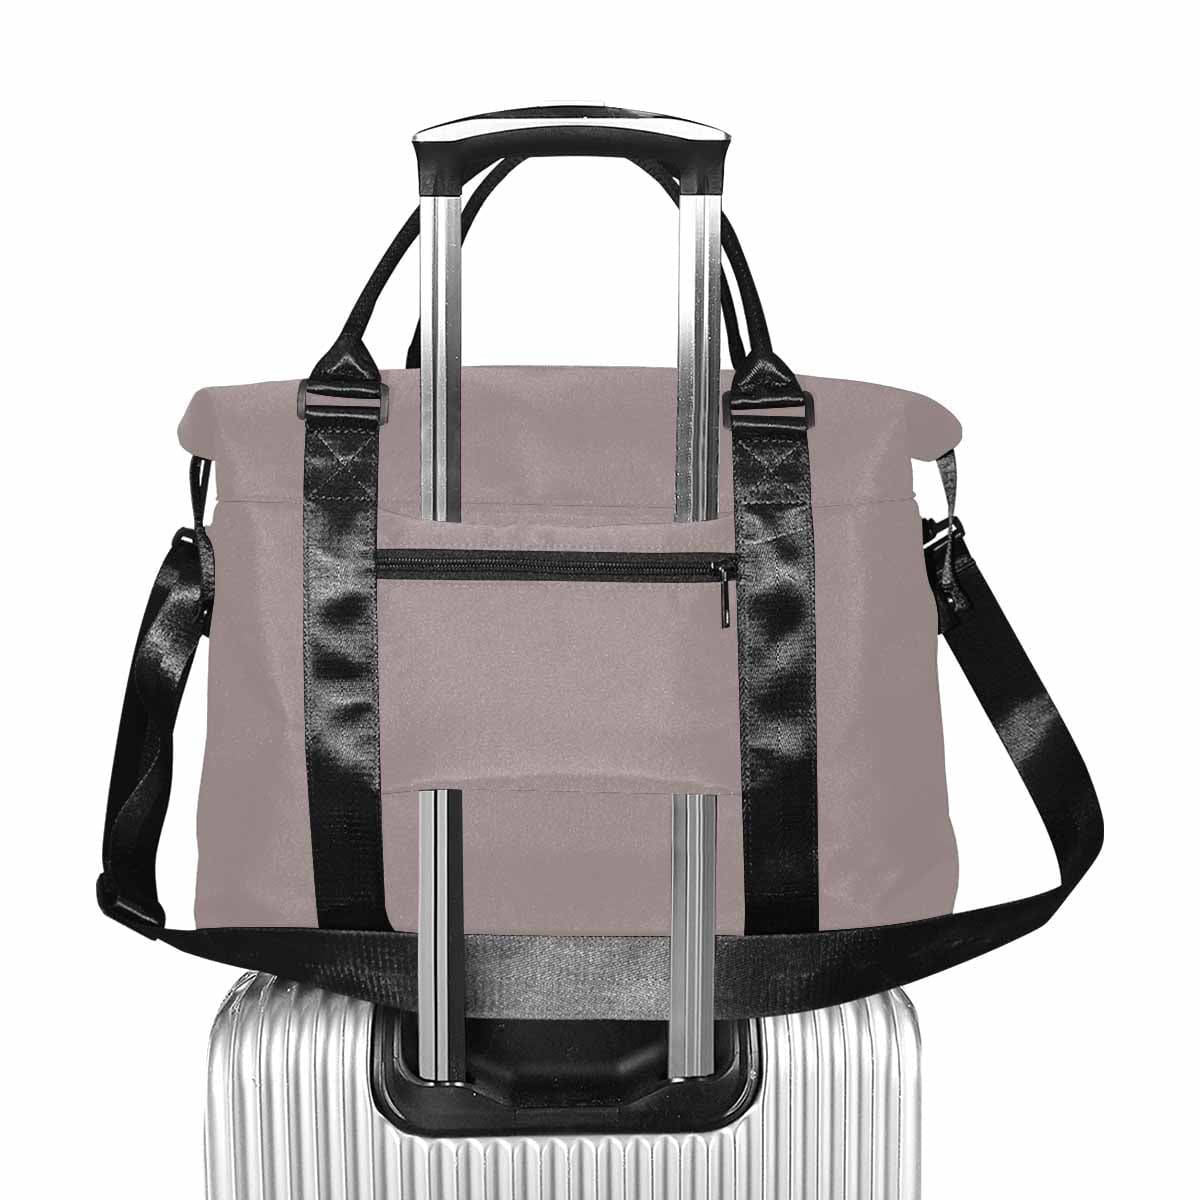 Coffee Brown Duffel Bag Large Travel Carry On - Bags | Duffel Bags